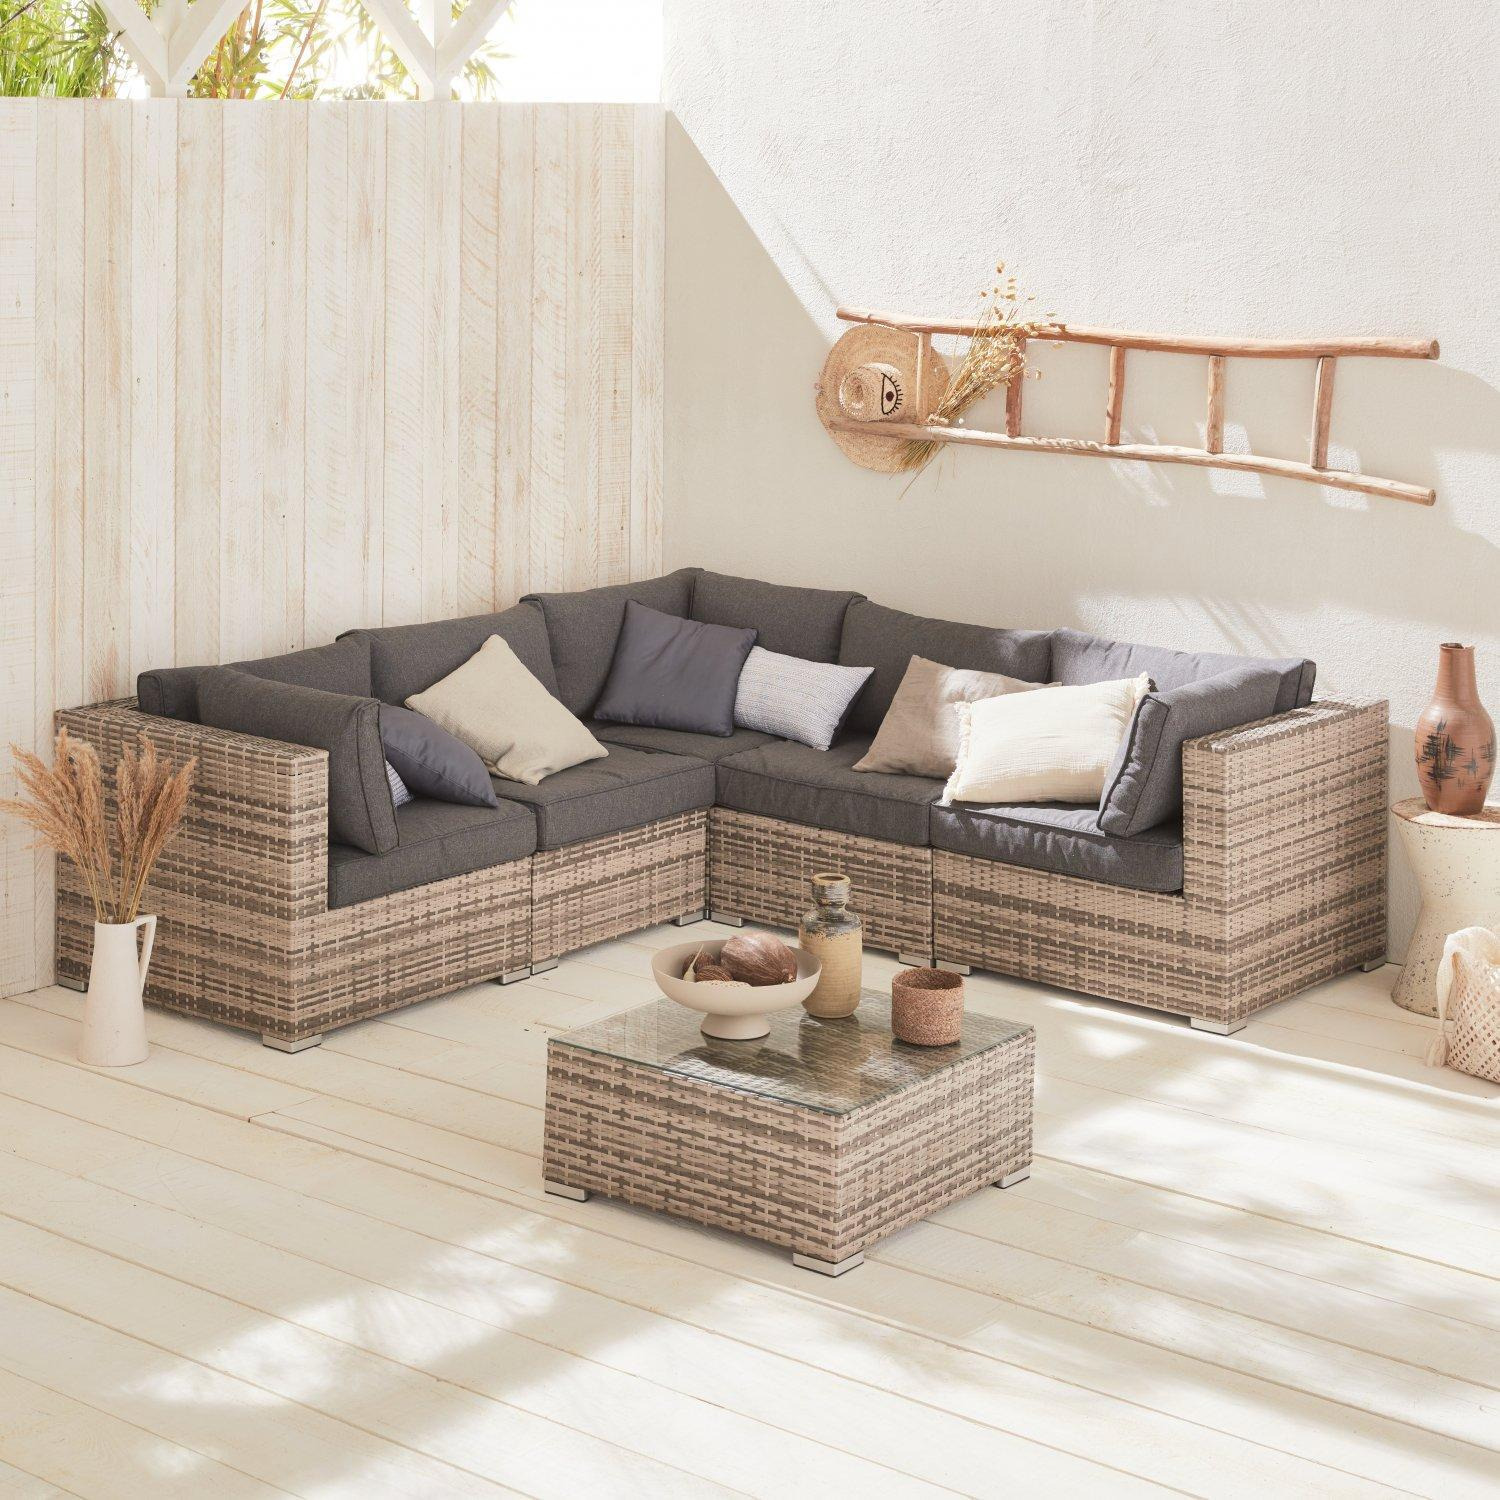 5-seater Premium Polyrattan Corner Garden Sofa Set - image 1